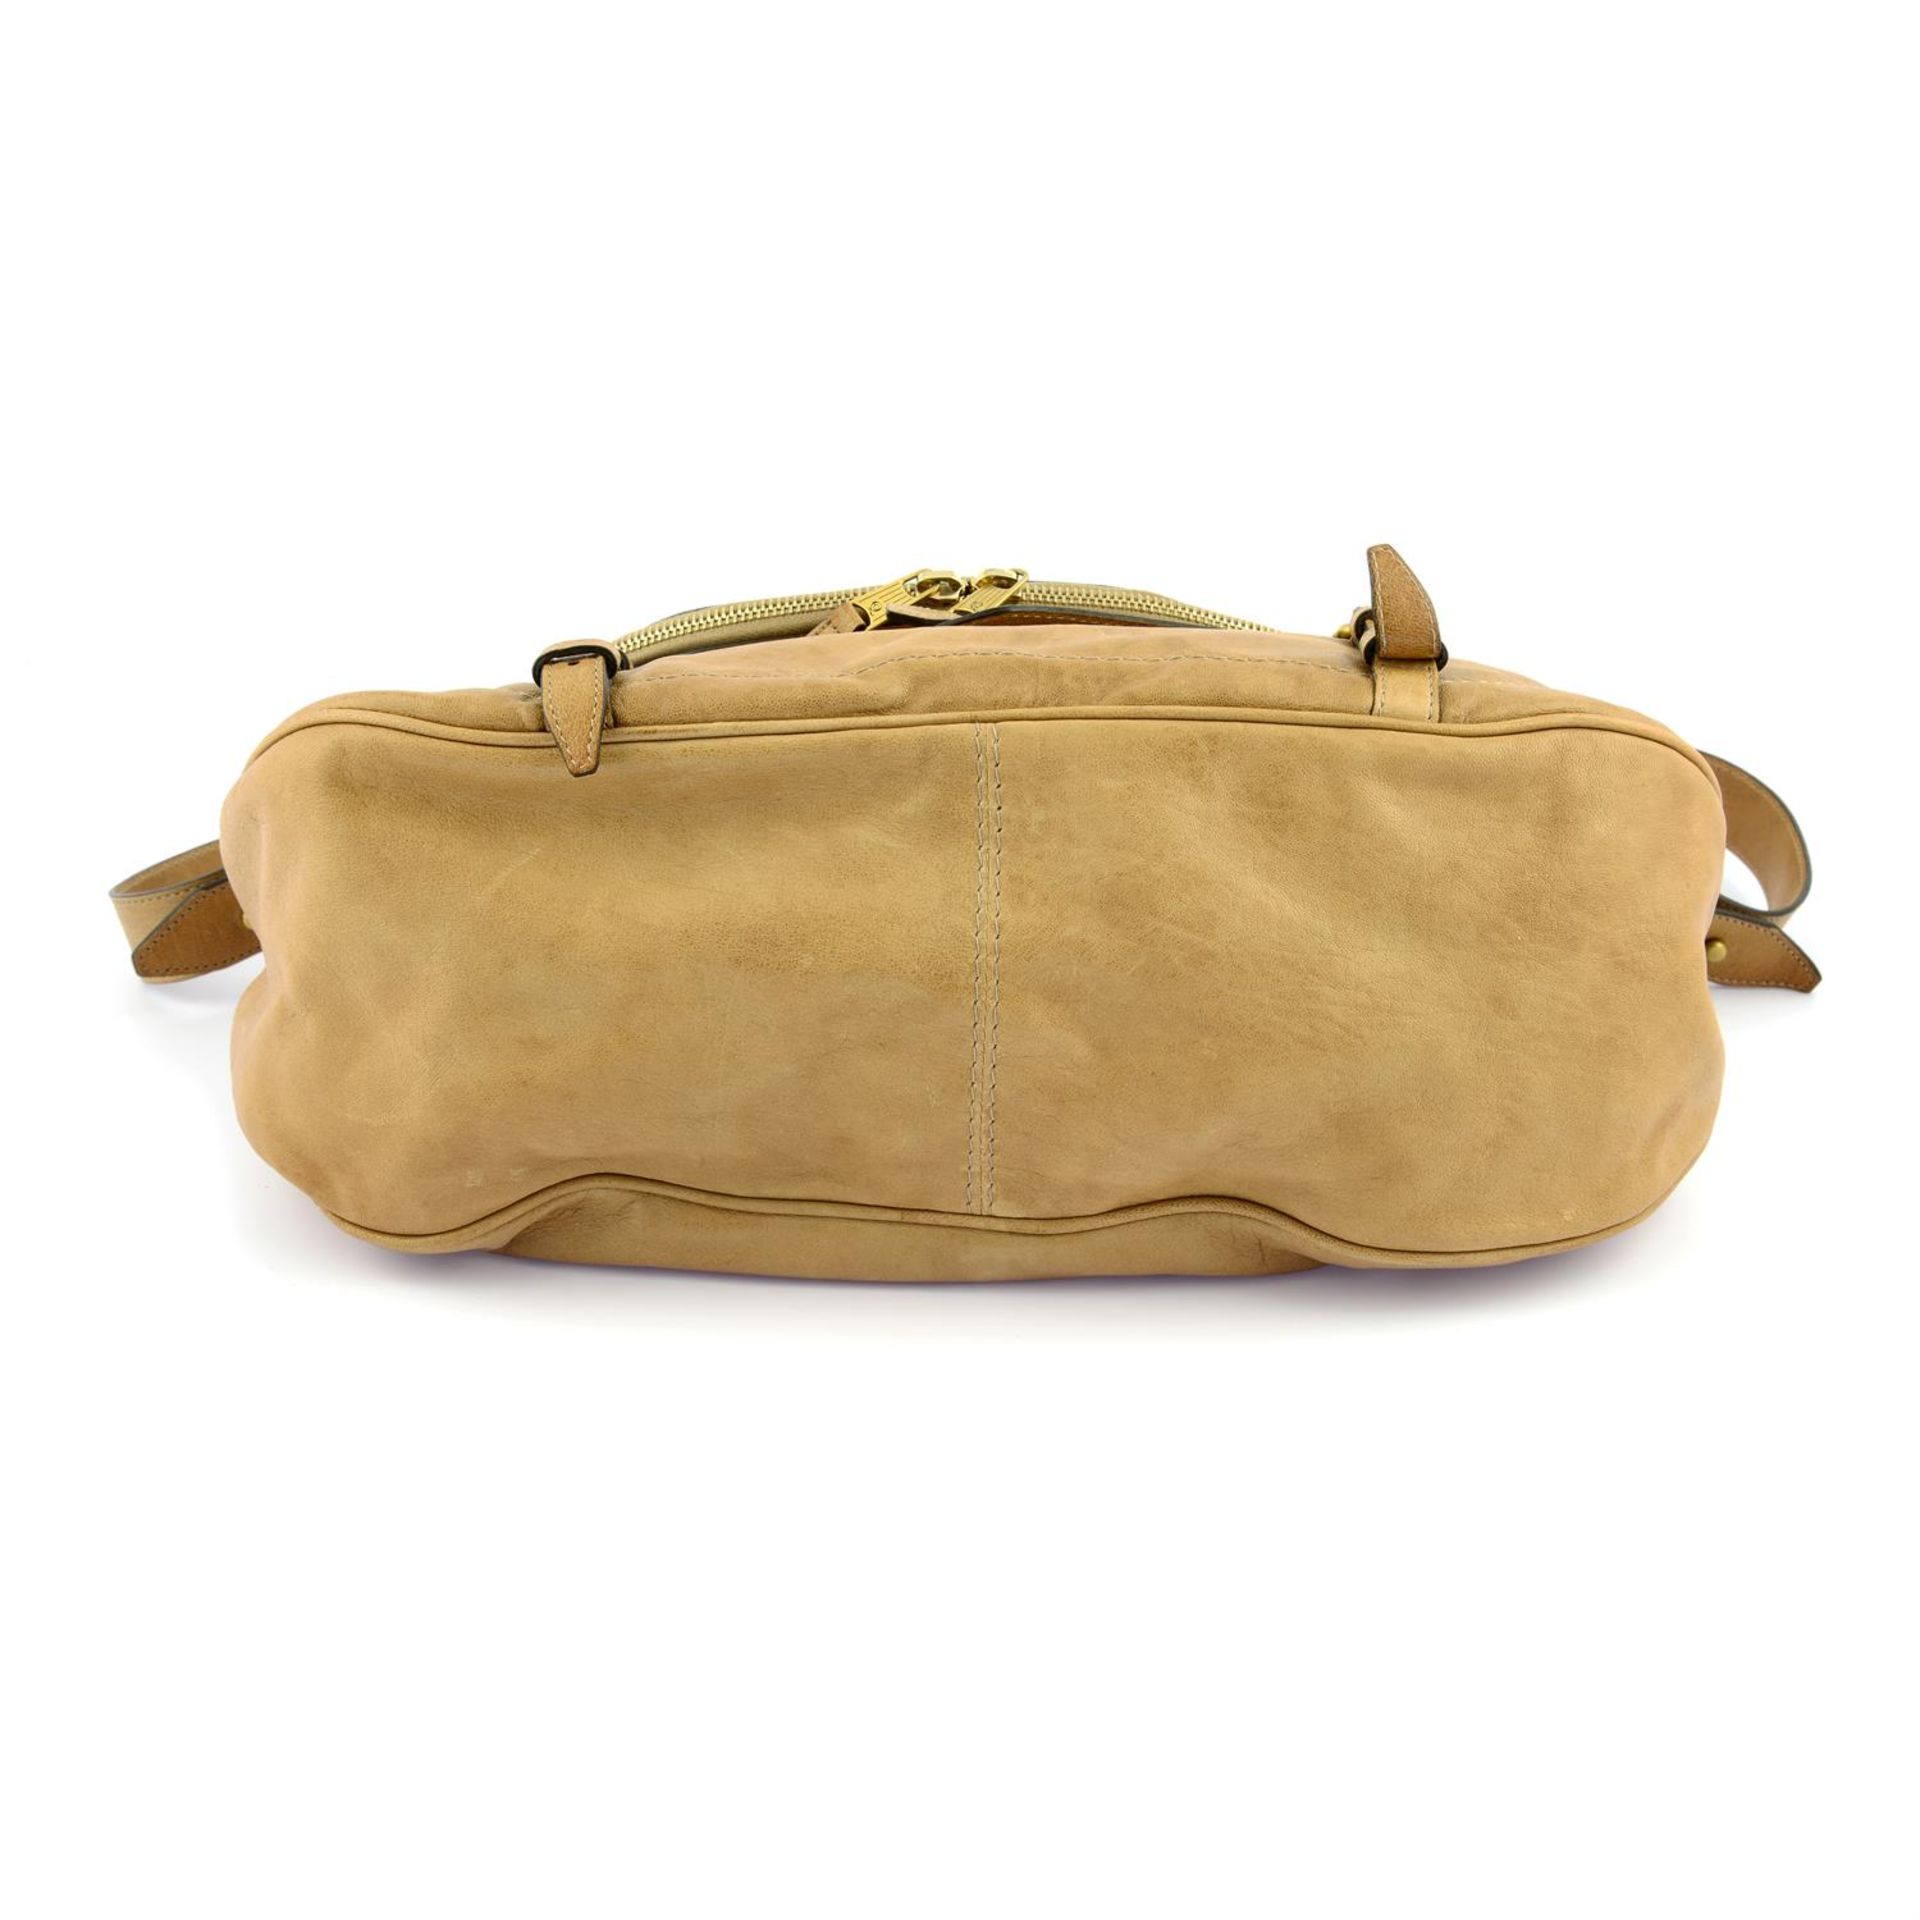 ALEXANDER MCQUEEN - a tan leather Faithfull handbag. - Bild 4 aus 5